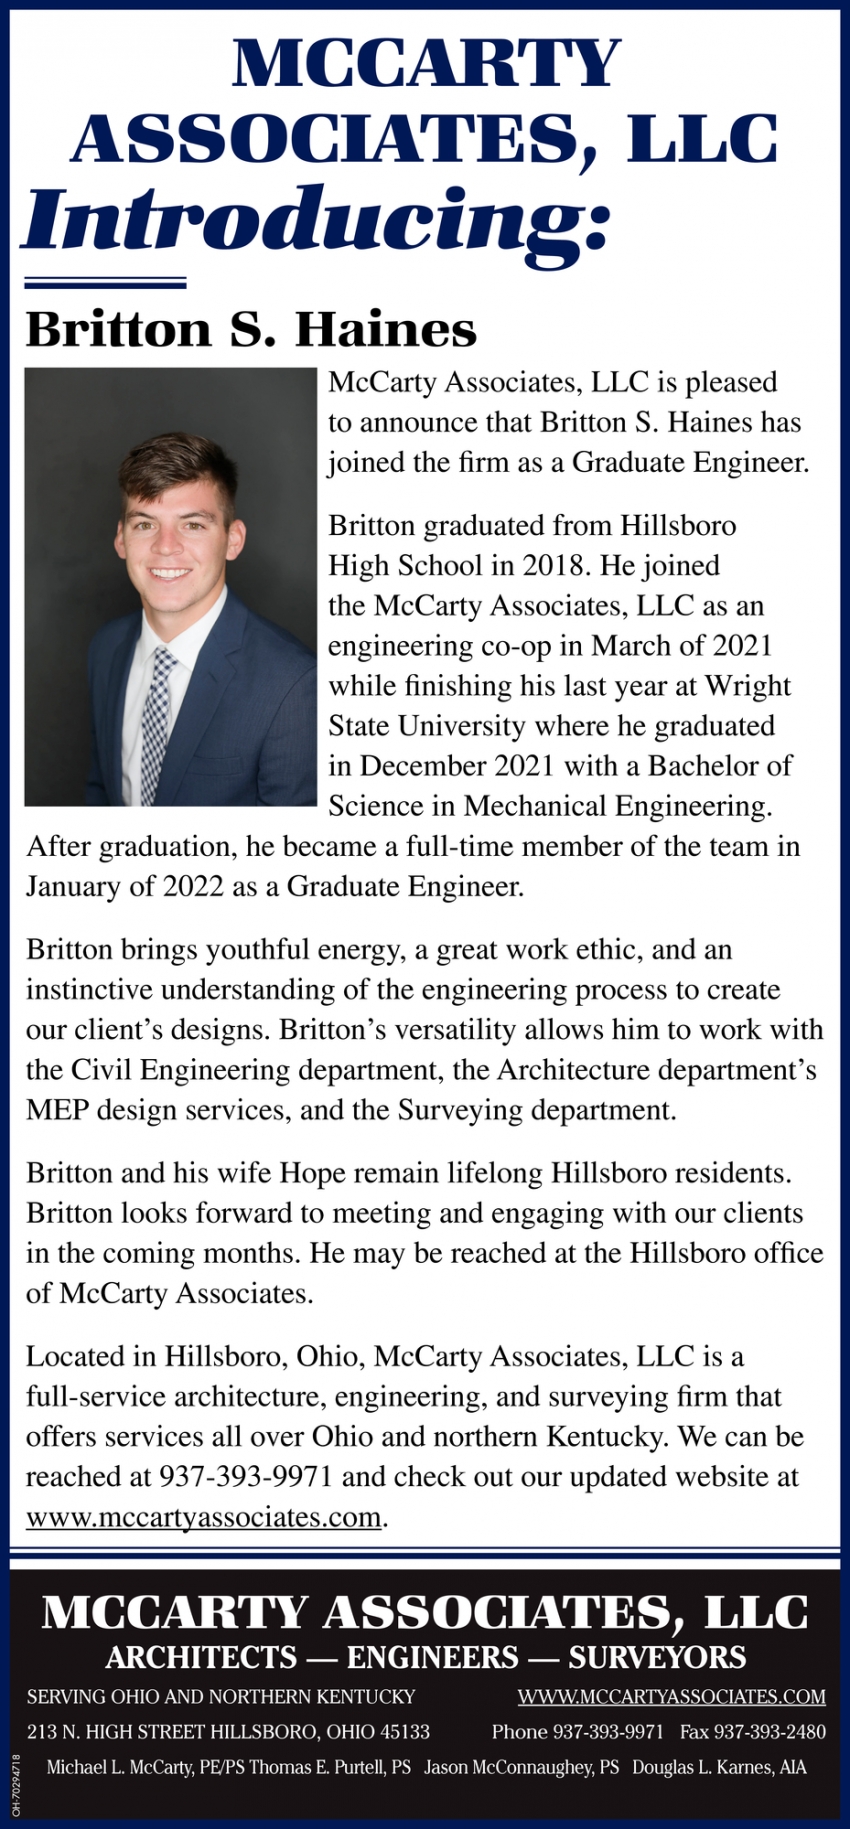 Introducing: Britton S. Haines